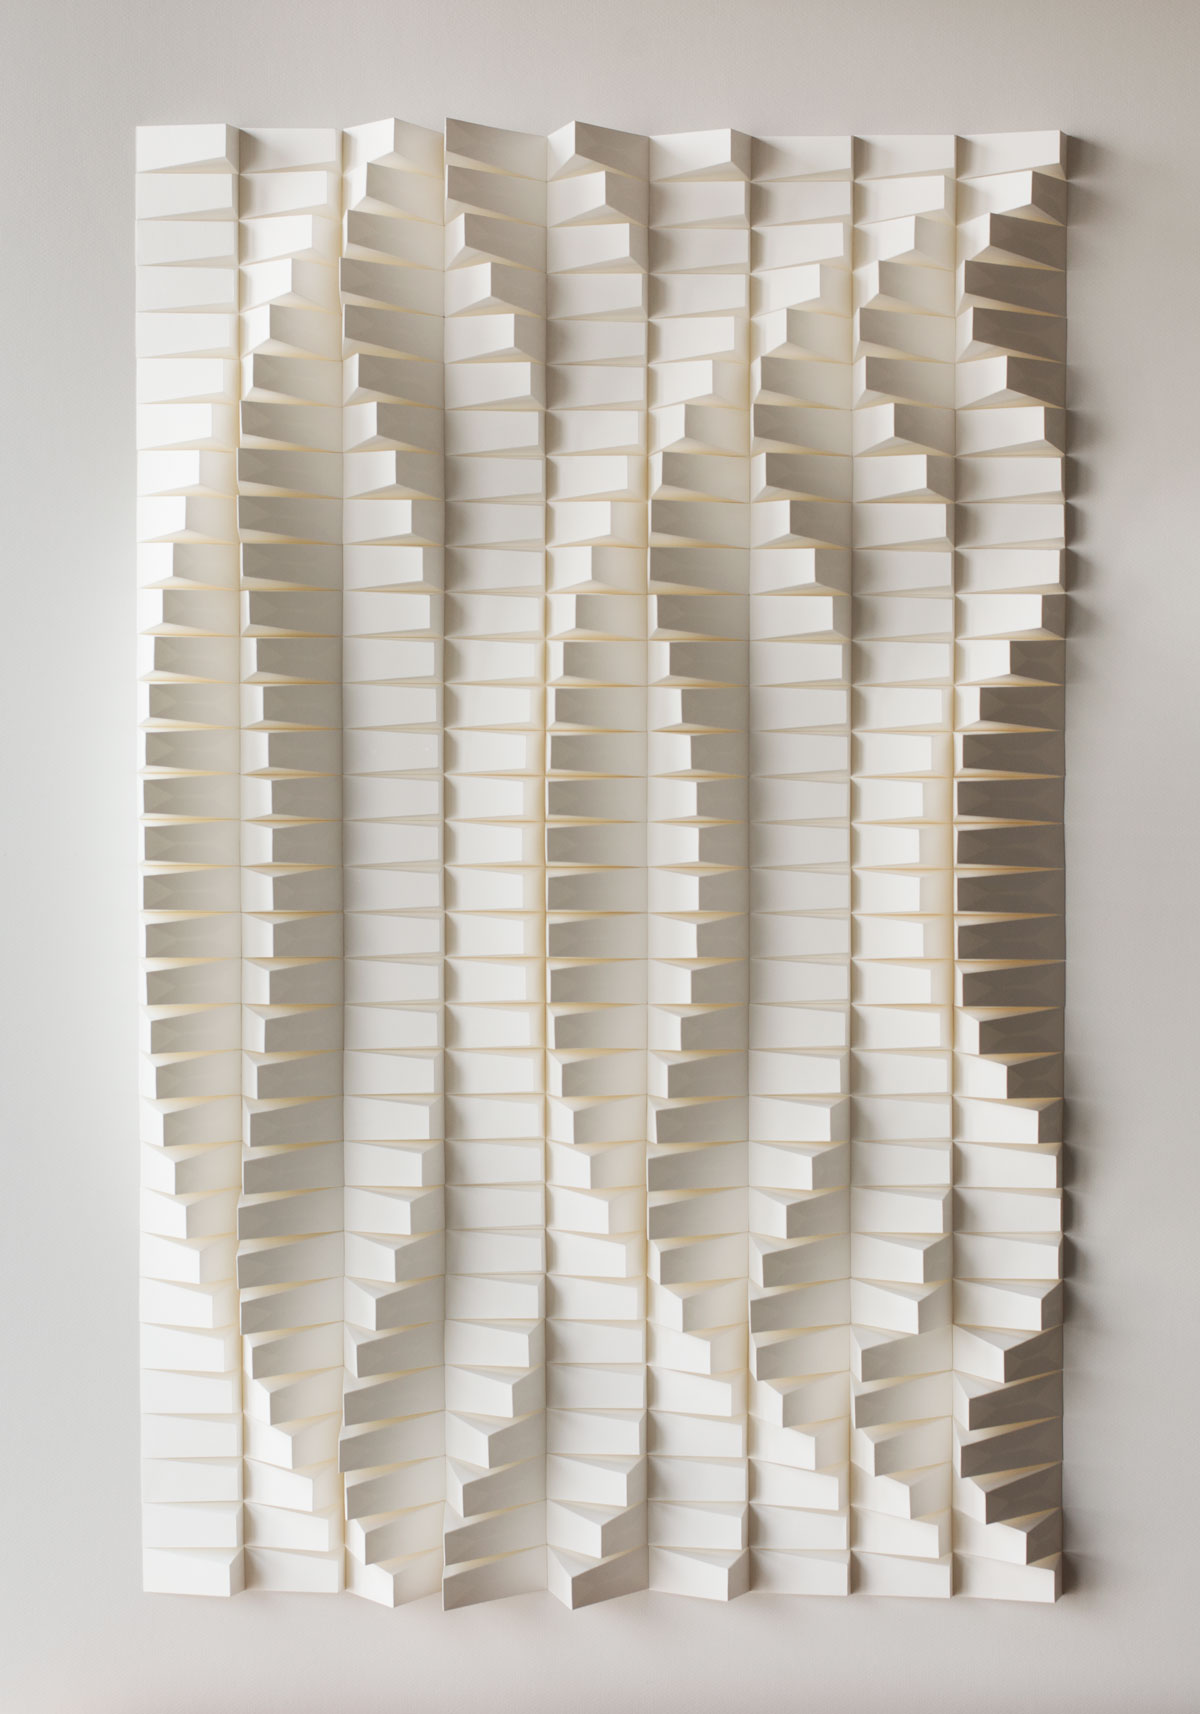 Origami Inspired Geometric Paper Sculptures By Anna Kruhelska (23)